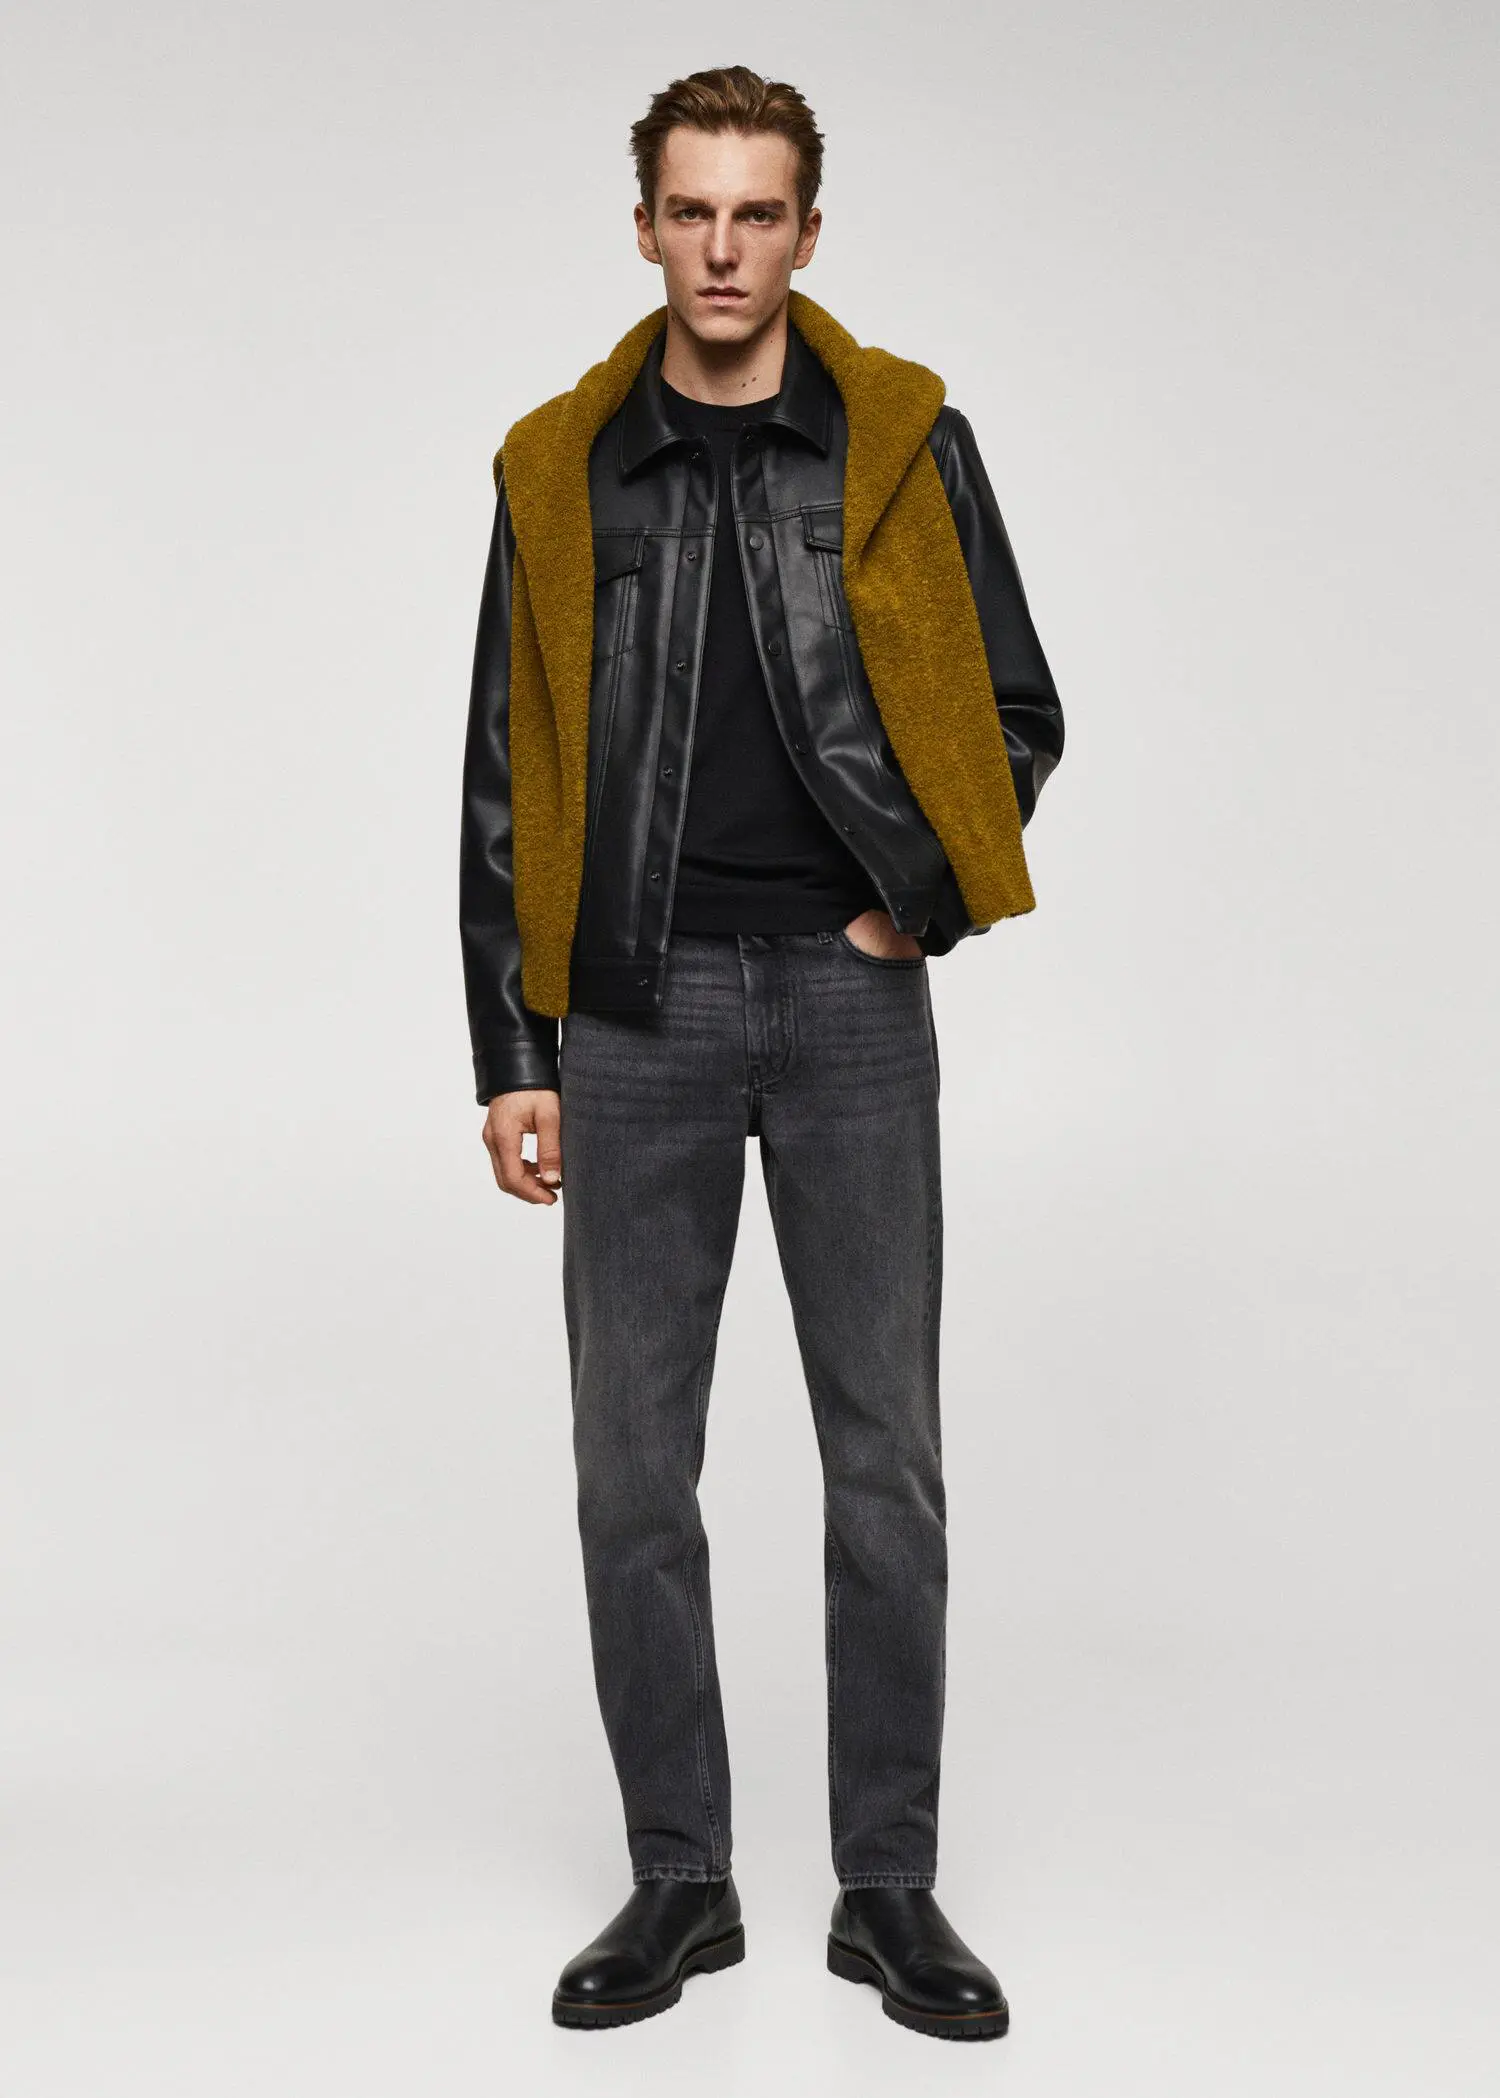 Mango Faux leather jacket with pockets. 3